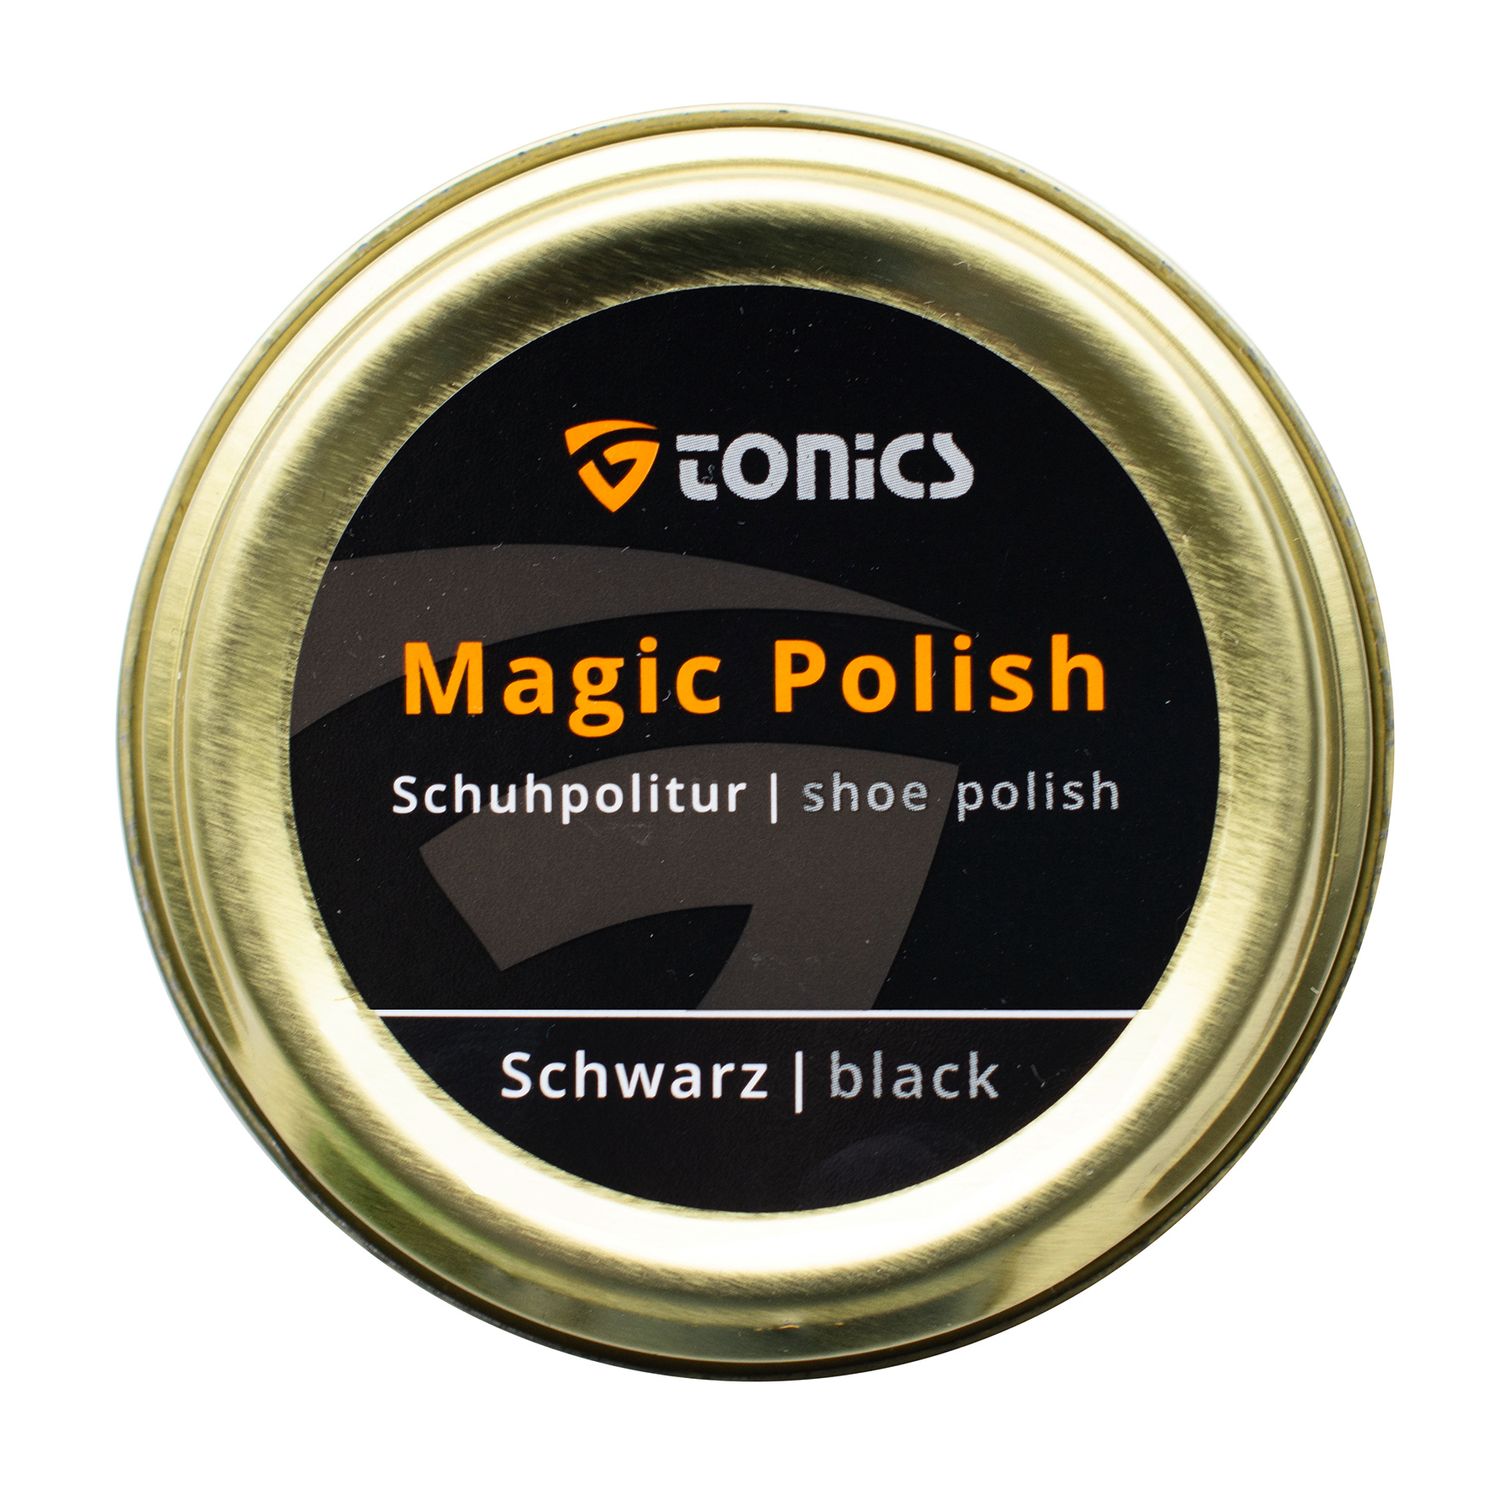 Tonics Magic Polish Schuh und Stiefelpolitur 50ml von Tonics